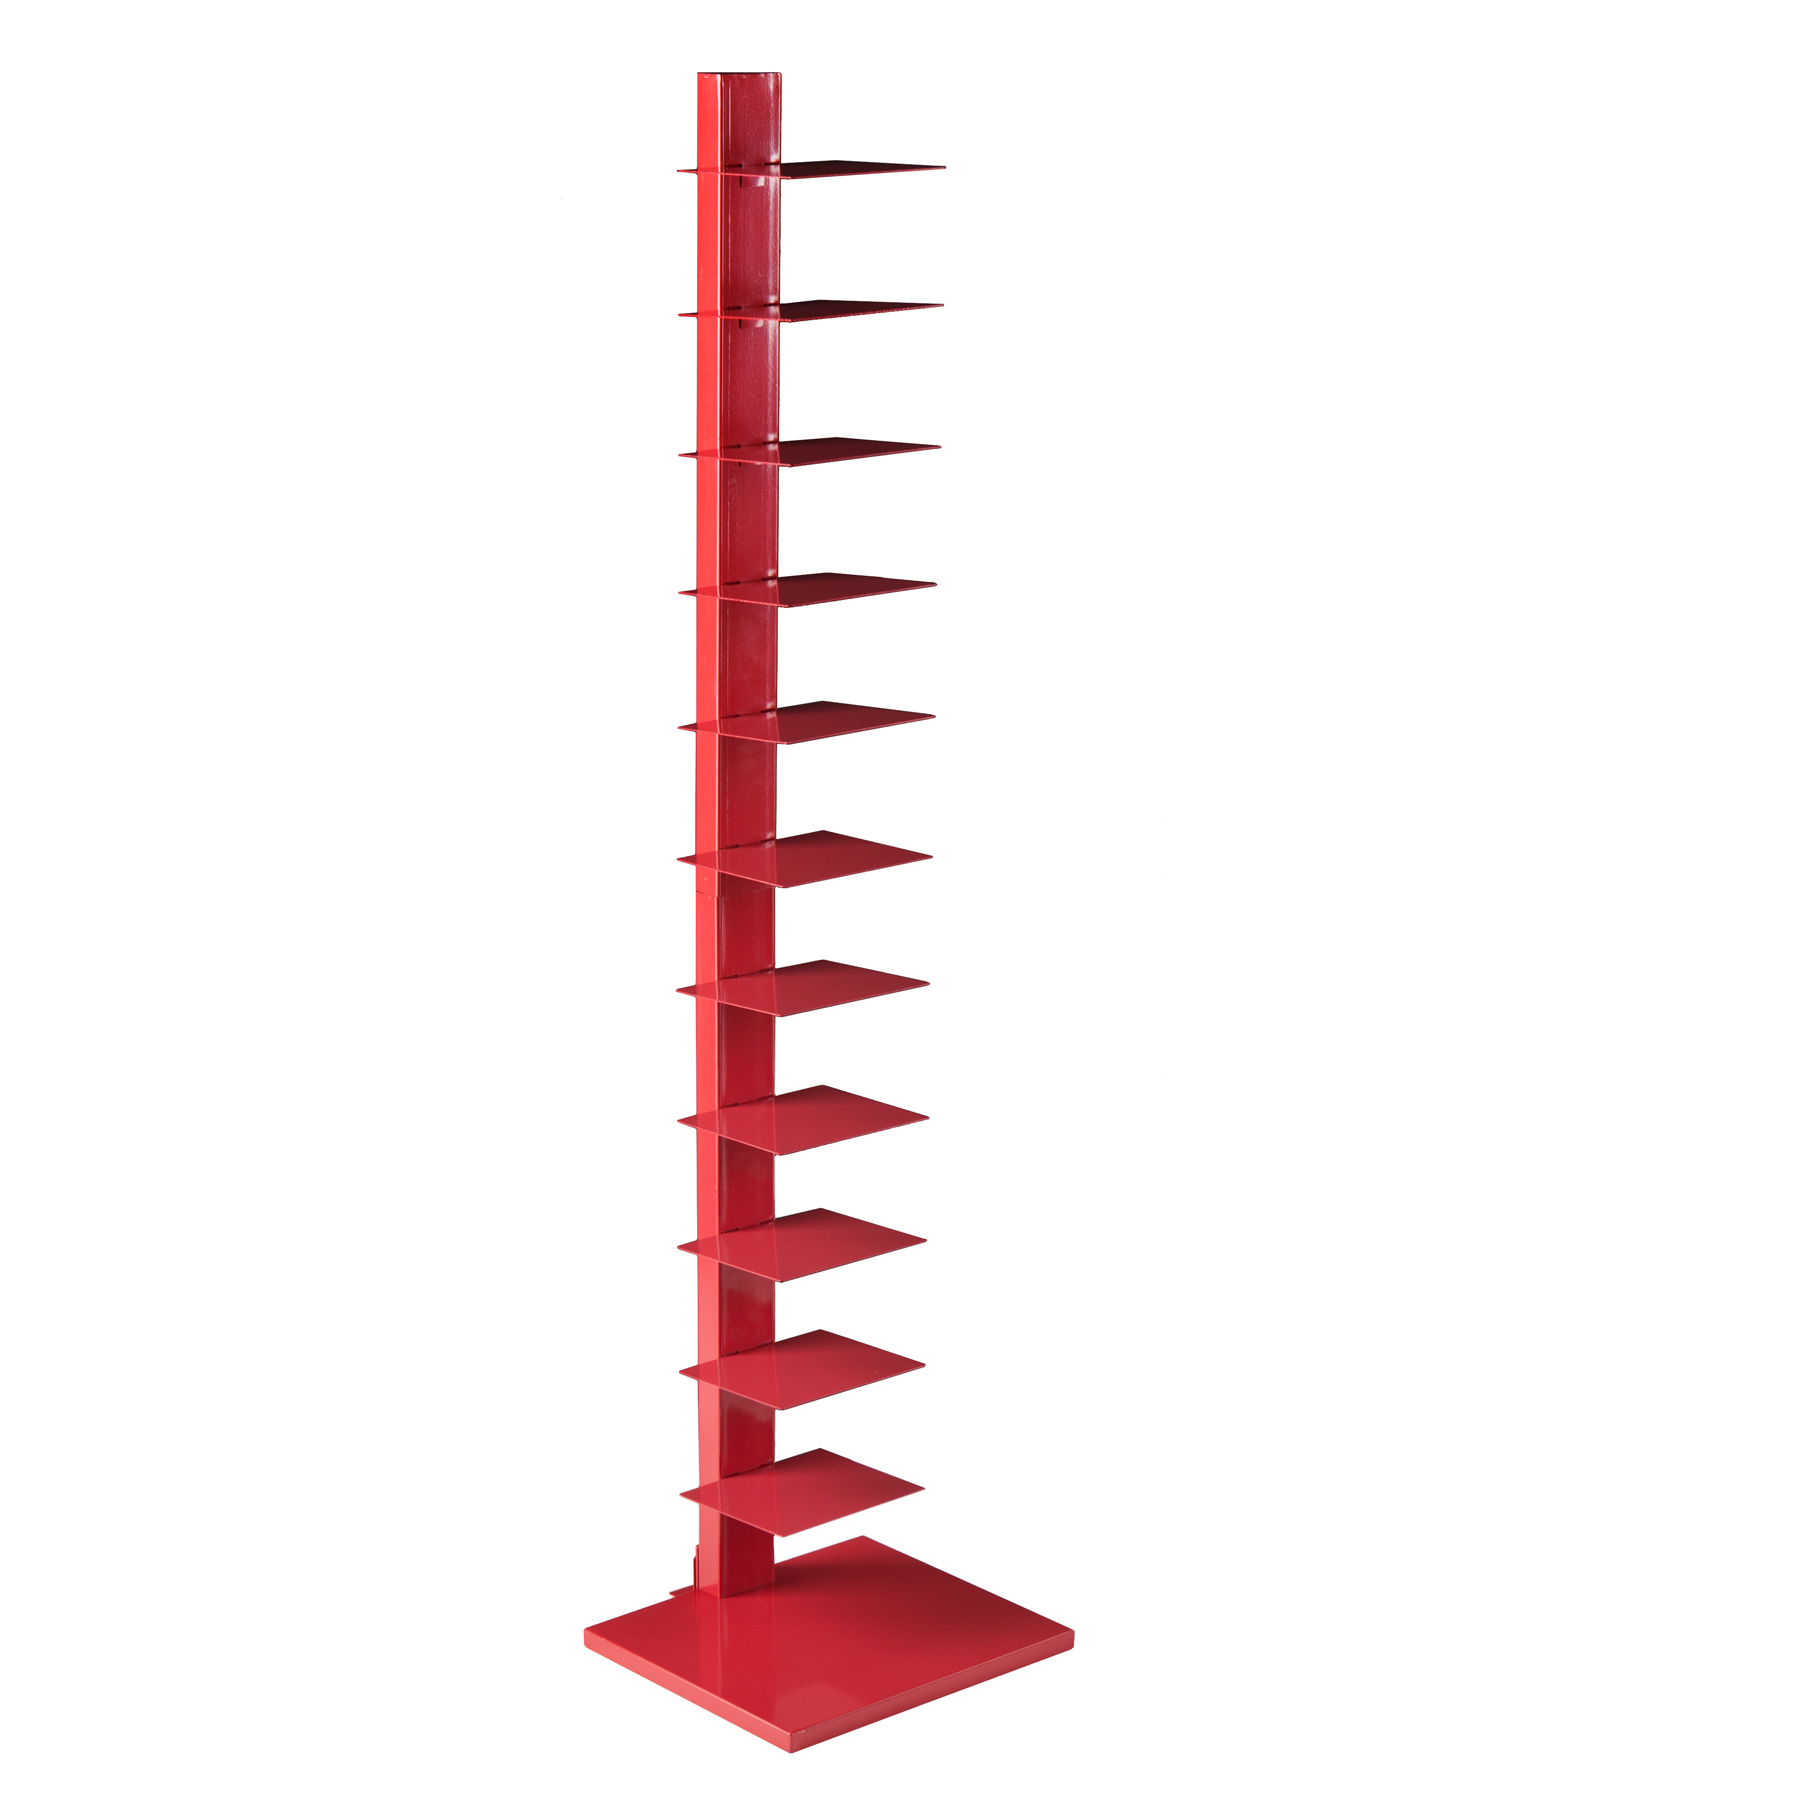 Furnituremaxx Luci Valiant Poppy Spine Tower Shelf